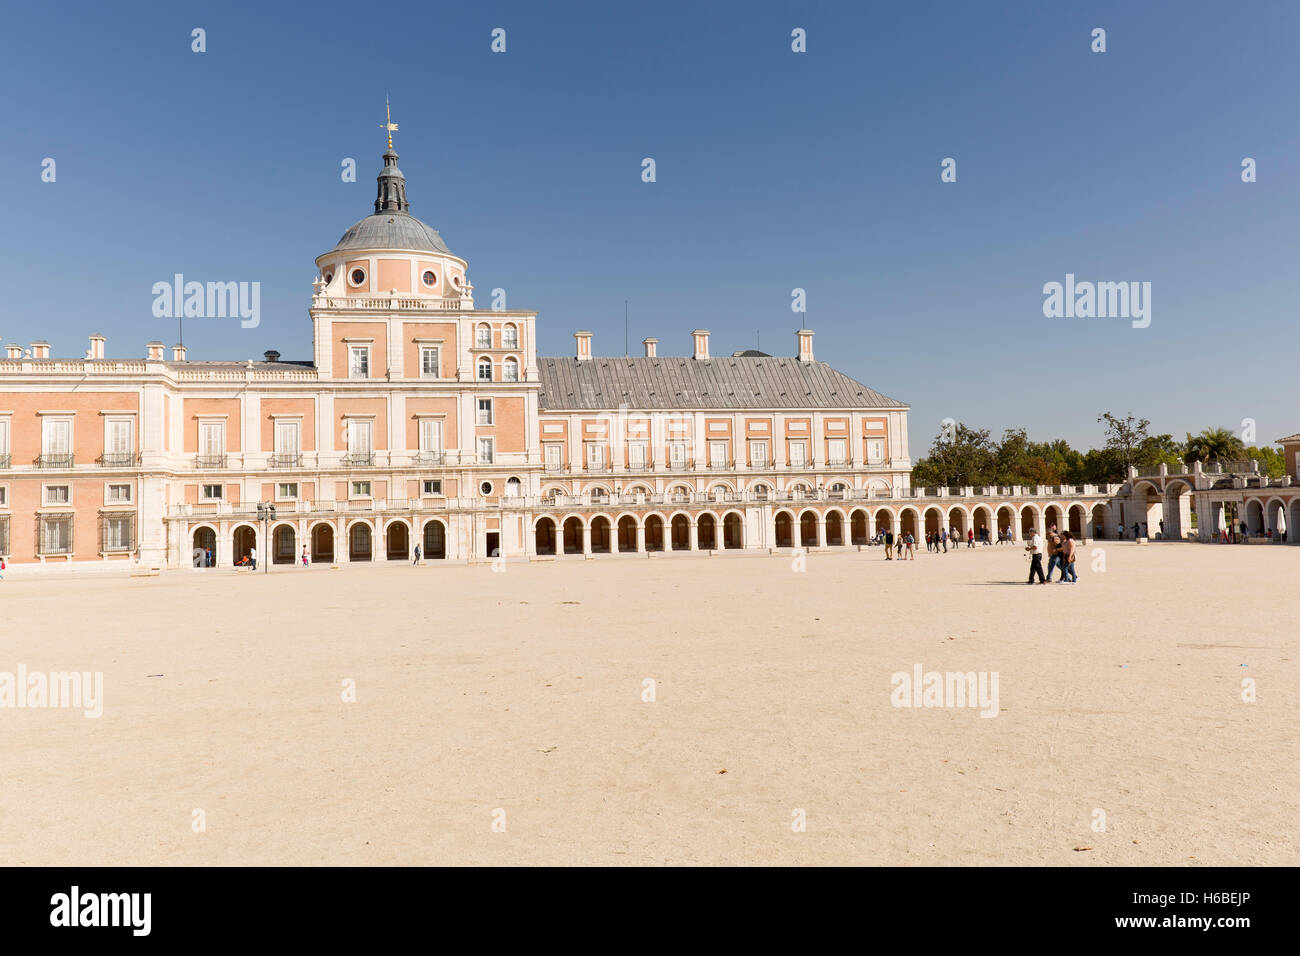 Aranjuez, Madrid, Espagne. 9 octobre 2016 : Palais Royal d'Aranjuez, Madrid, Espagne. Banque D'Images